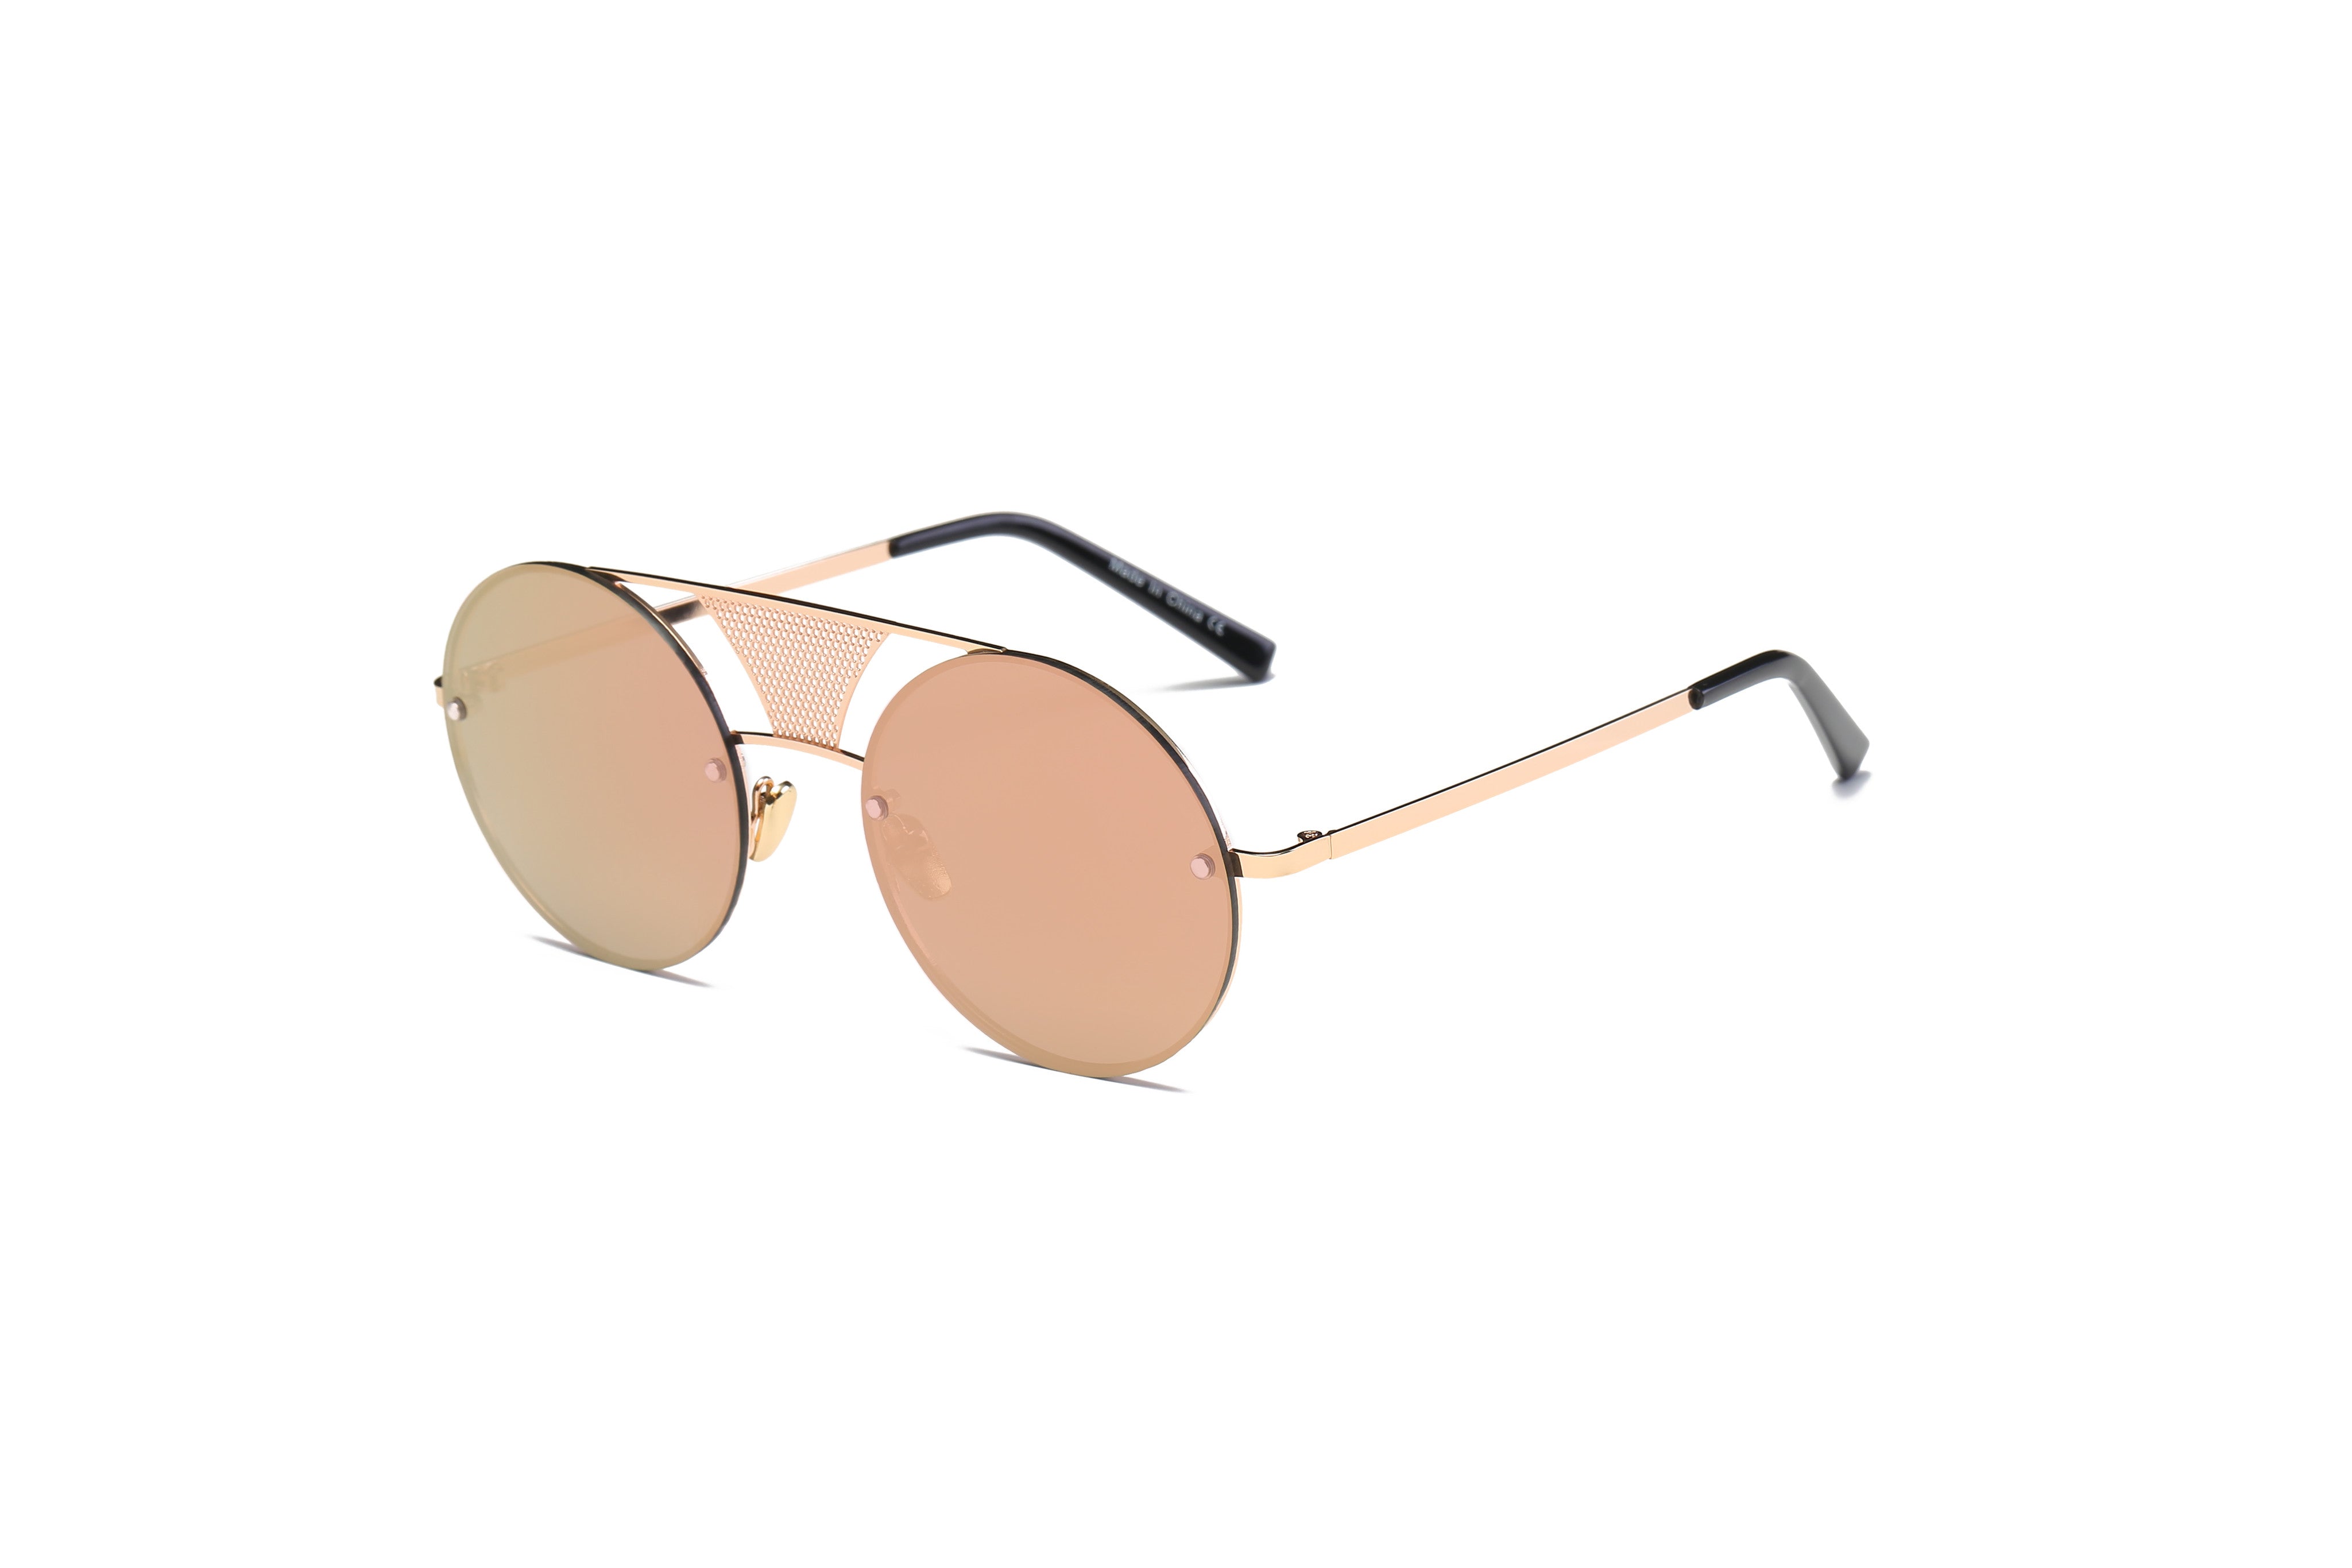 S2012 - Retro Round Brow-Bar Circle Fashion Wholesale Sunglasses GOLD Frame - Peach Lens